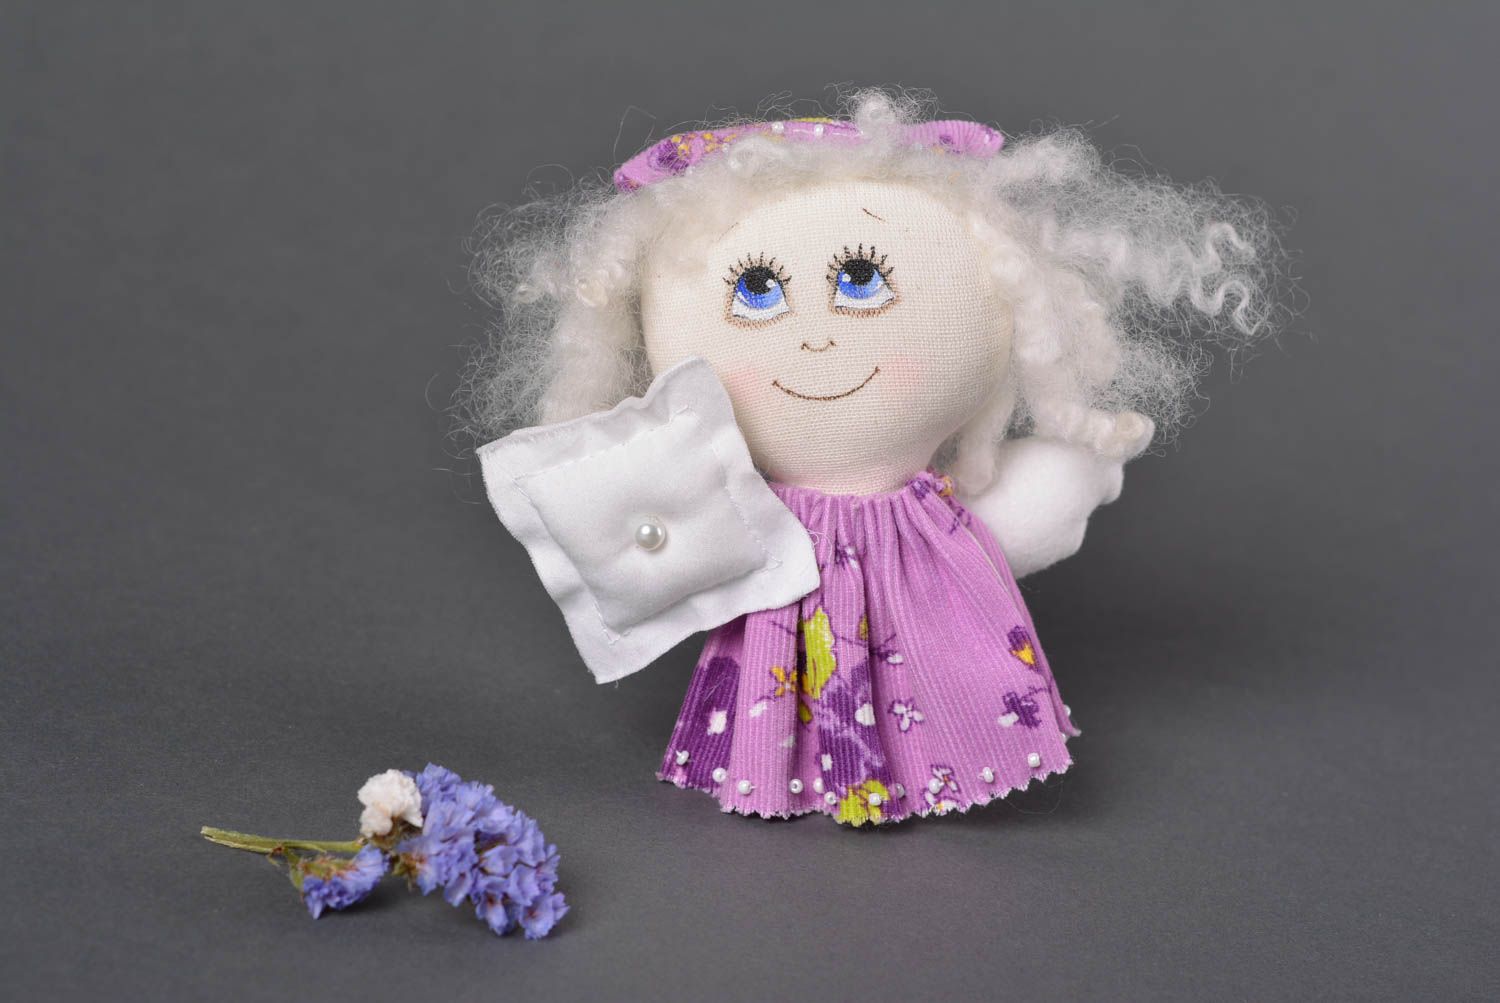 Handmade doll designer doll unusual doll for nursery decor interior toy photo 1